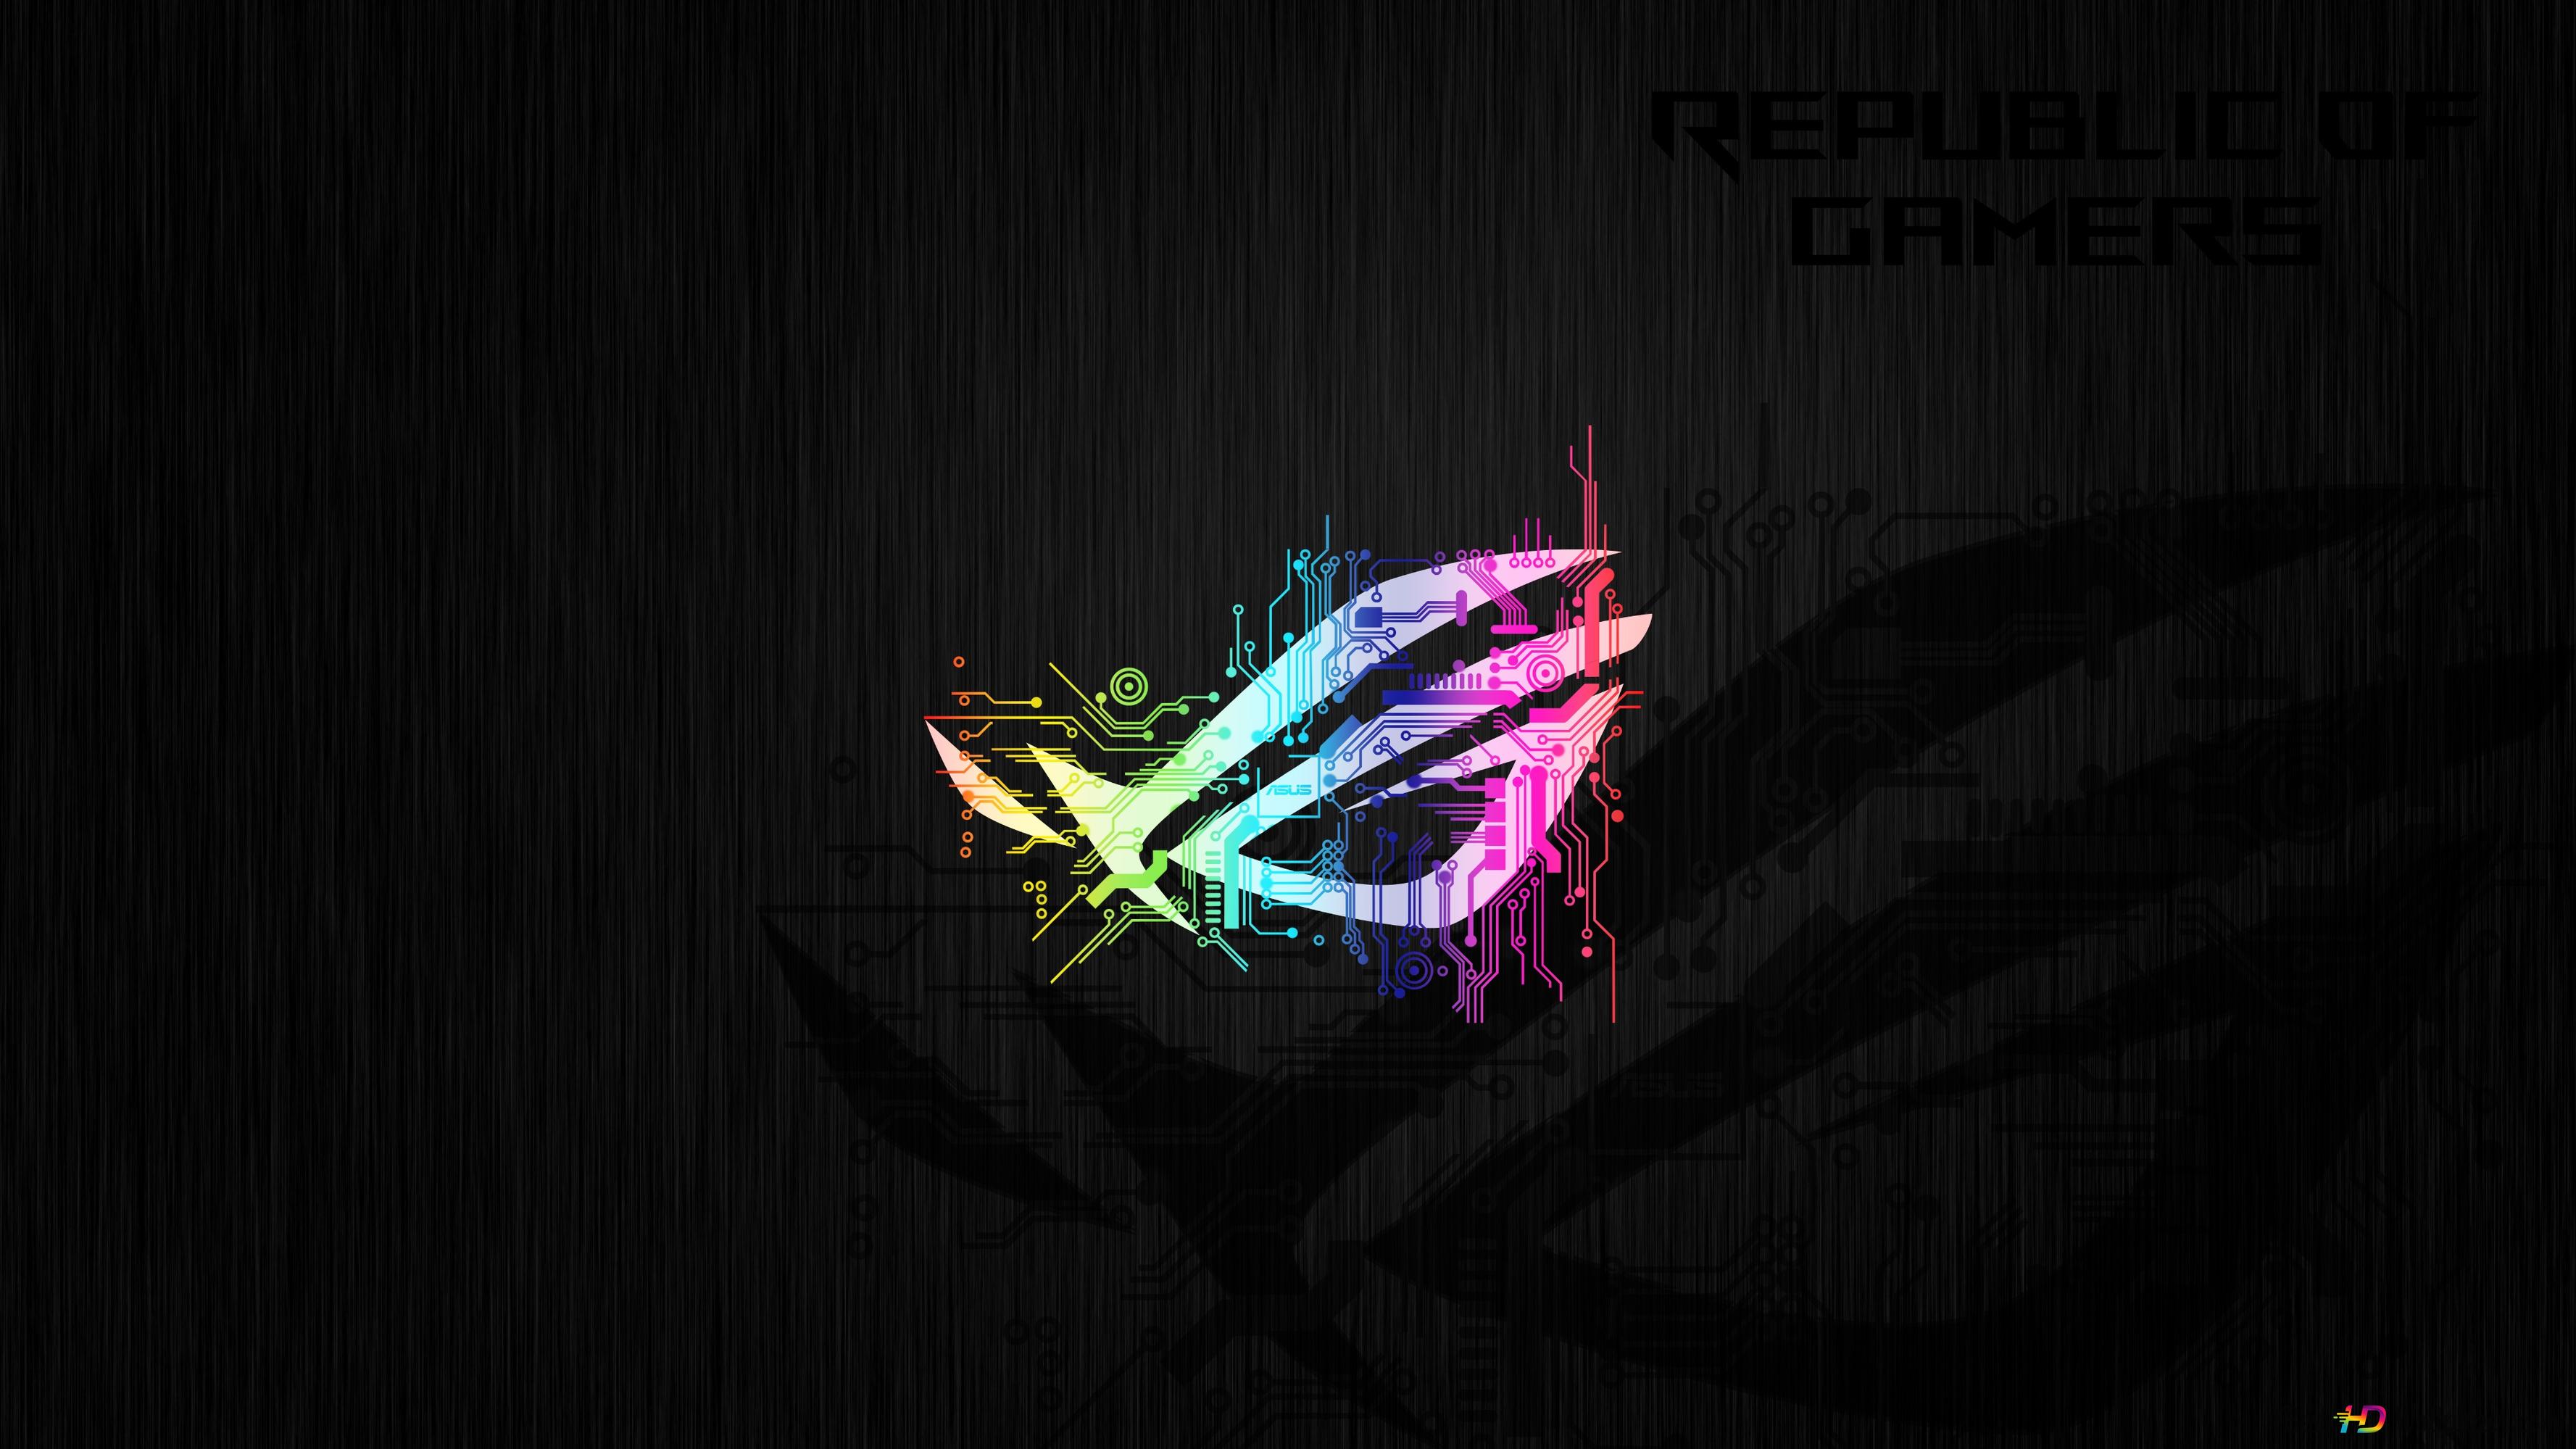 Asus ROG [Republic Of Gamers] Hi Tech Rainbow Neon LOGO 4K Wallpaper Download